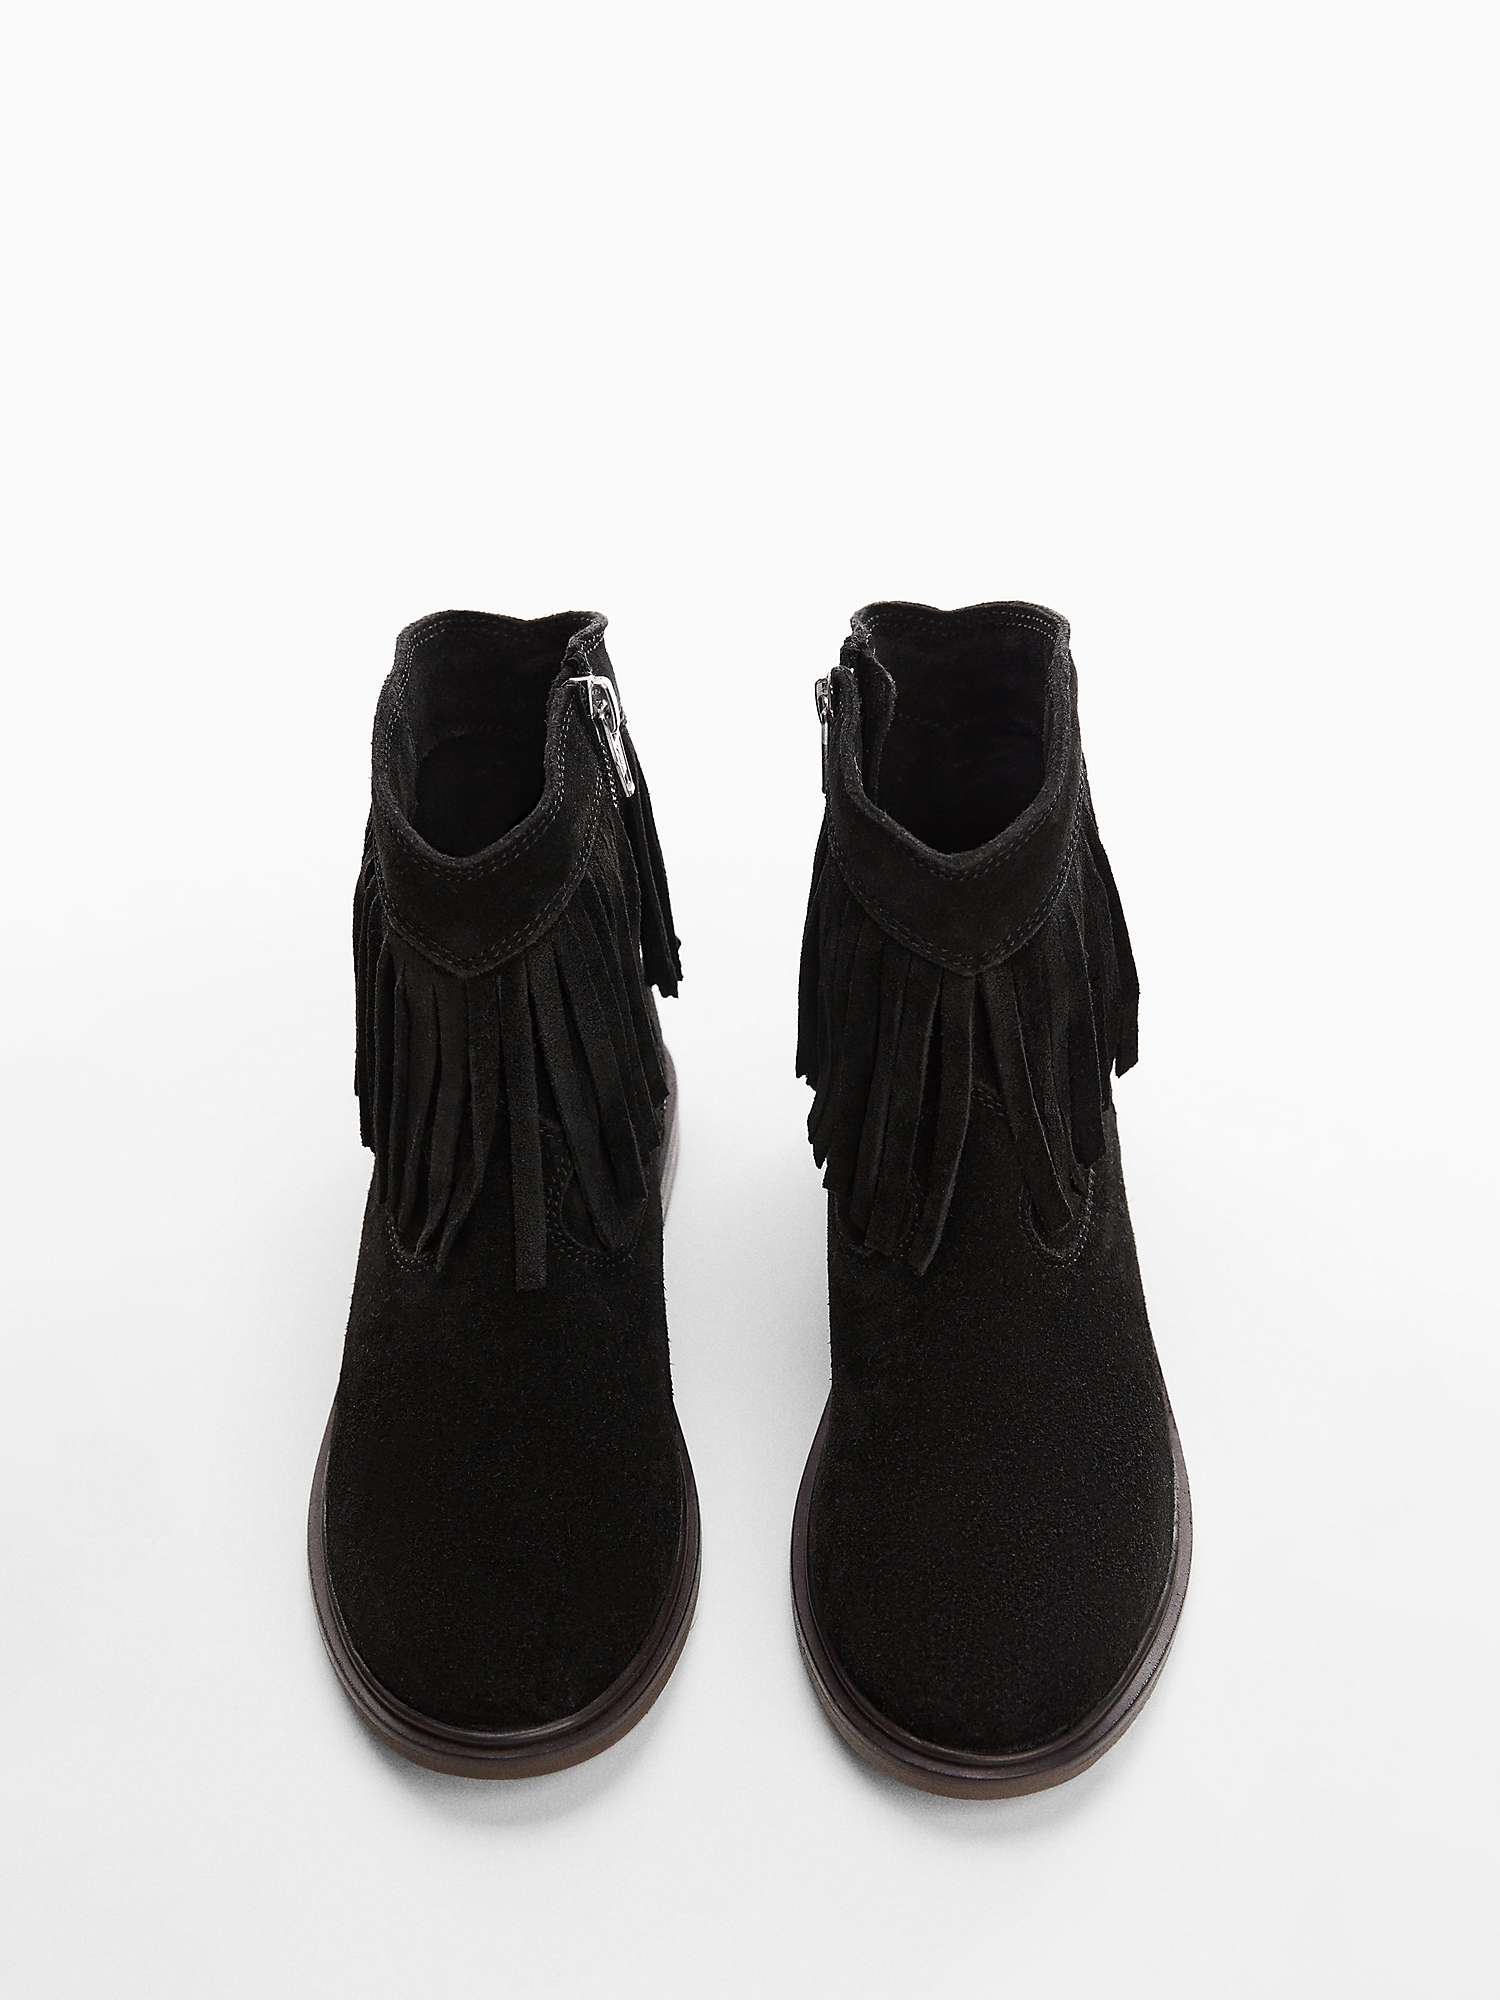 Buy Mango Kids' Dakota Fringed Leather Boots, Black Online at johnlewis.com